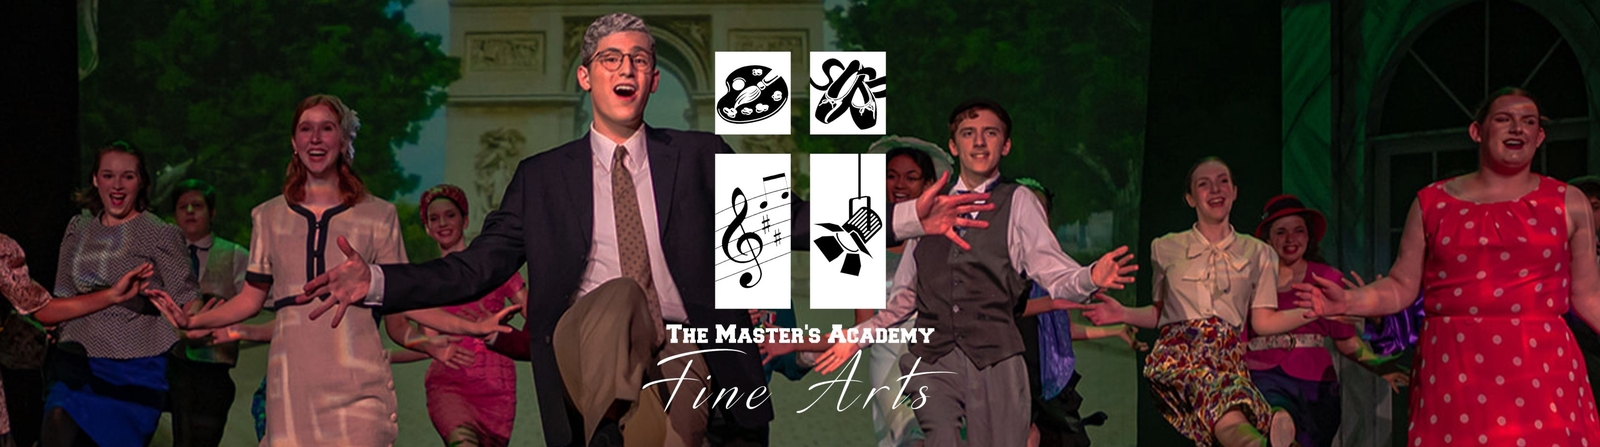 The Master's Academy Fine Arts